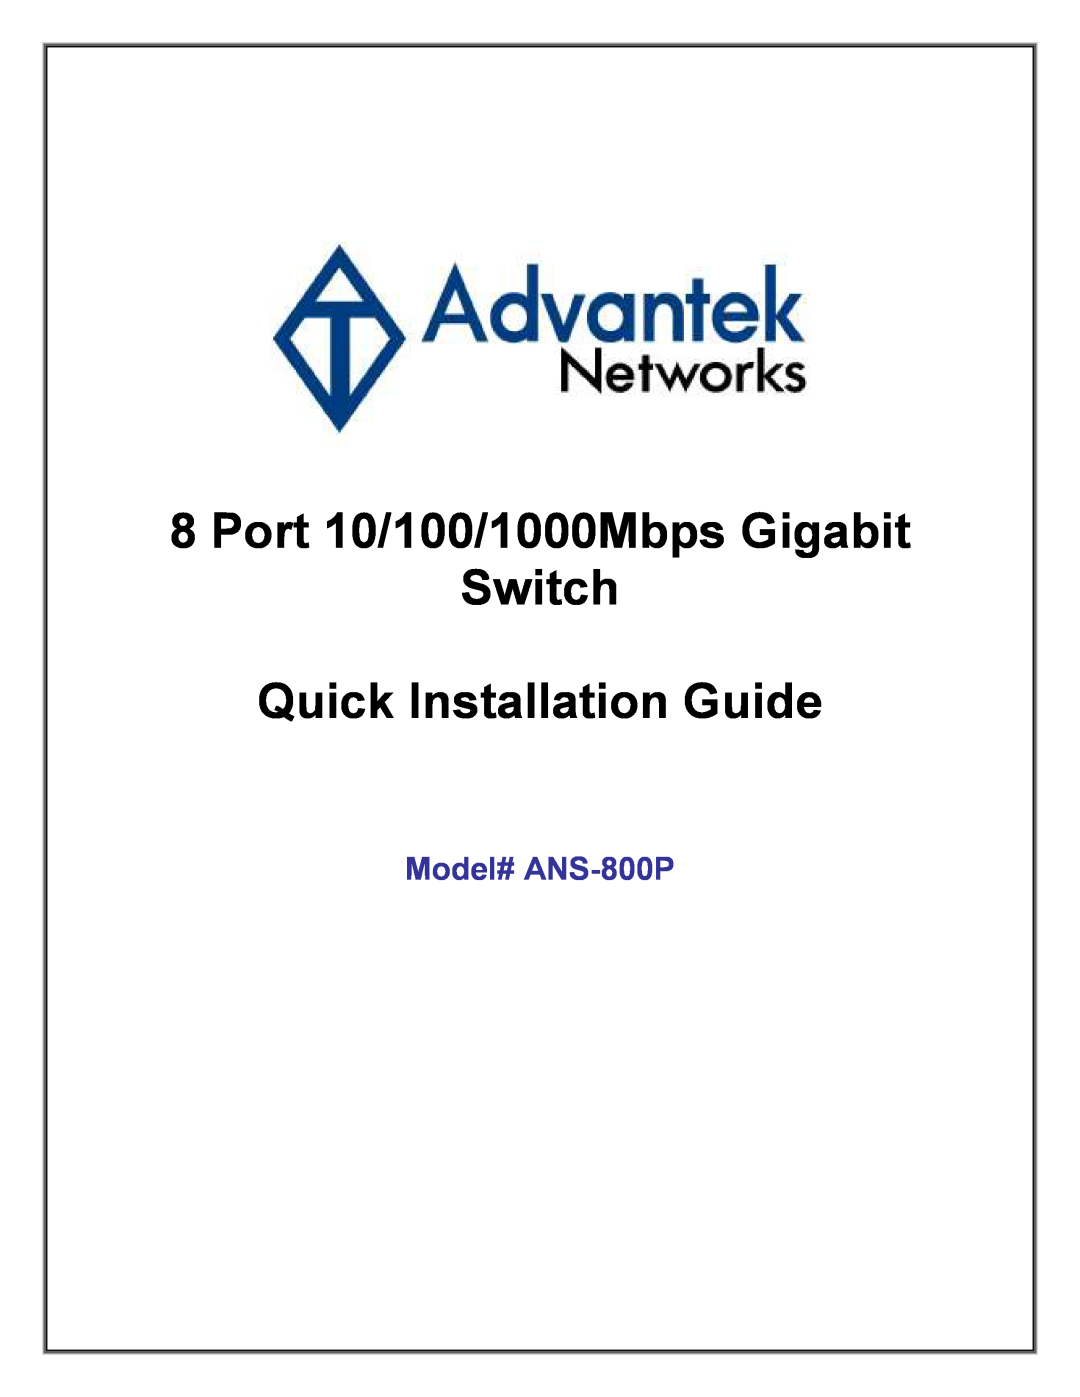 Advantek Networks manual Port 10/100/1000Mbps Gigabit Switch Quick Installation Guide, Model# ANS-800P 